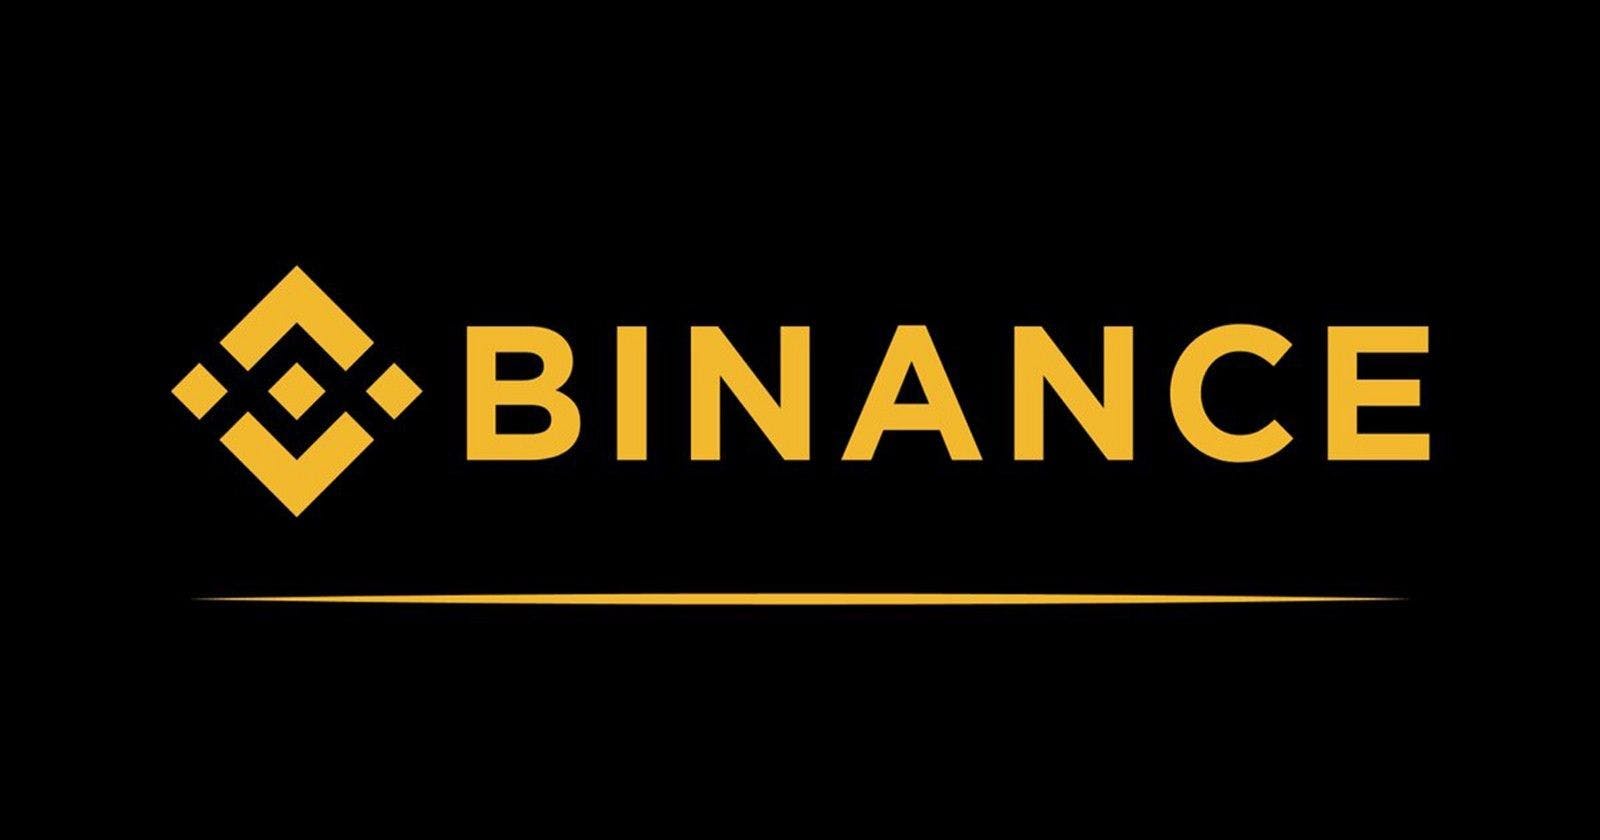 How to create the Binance logo with CSS